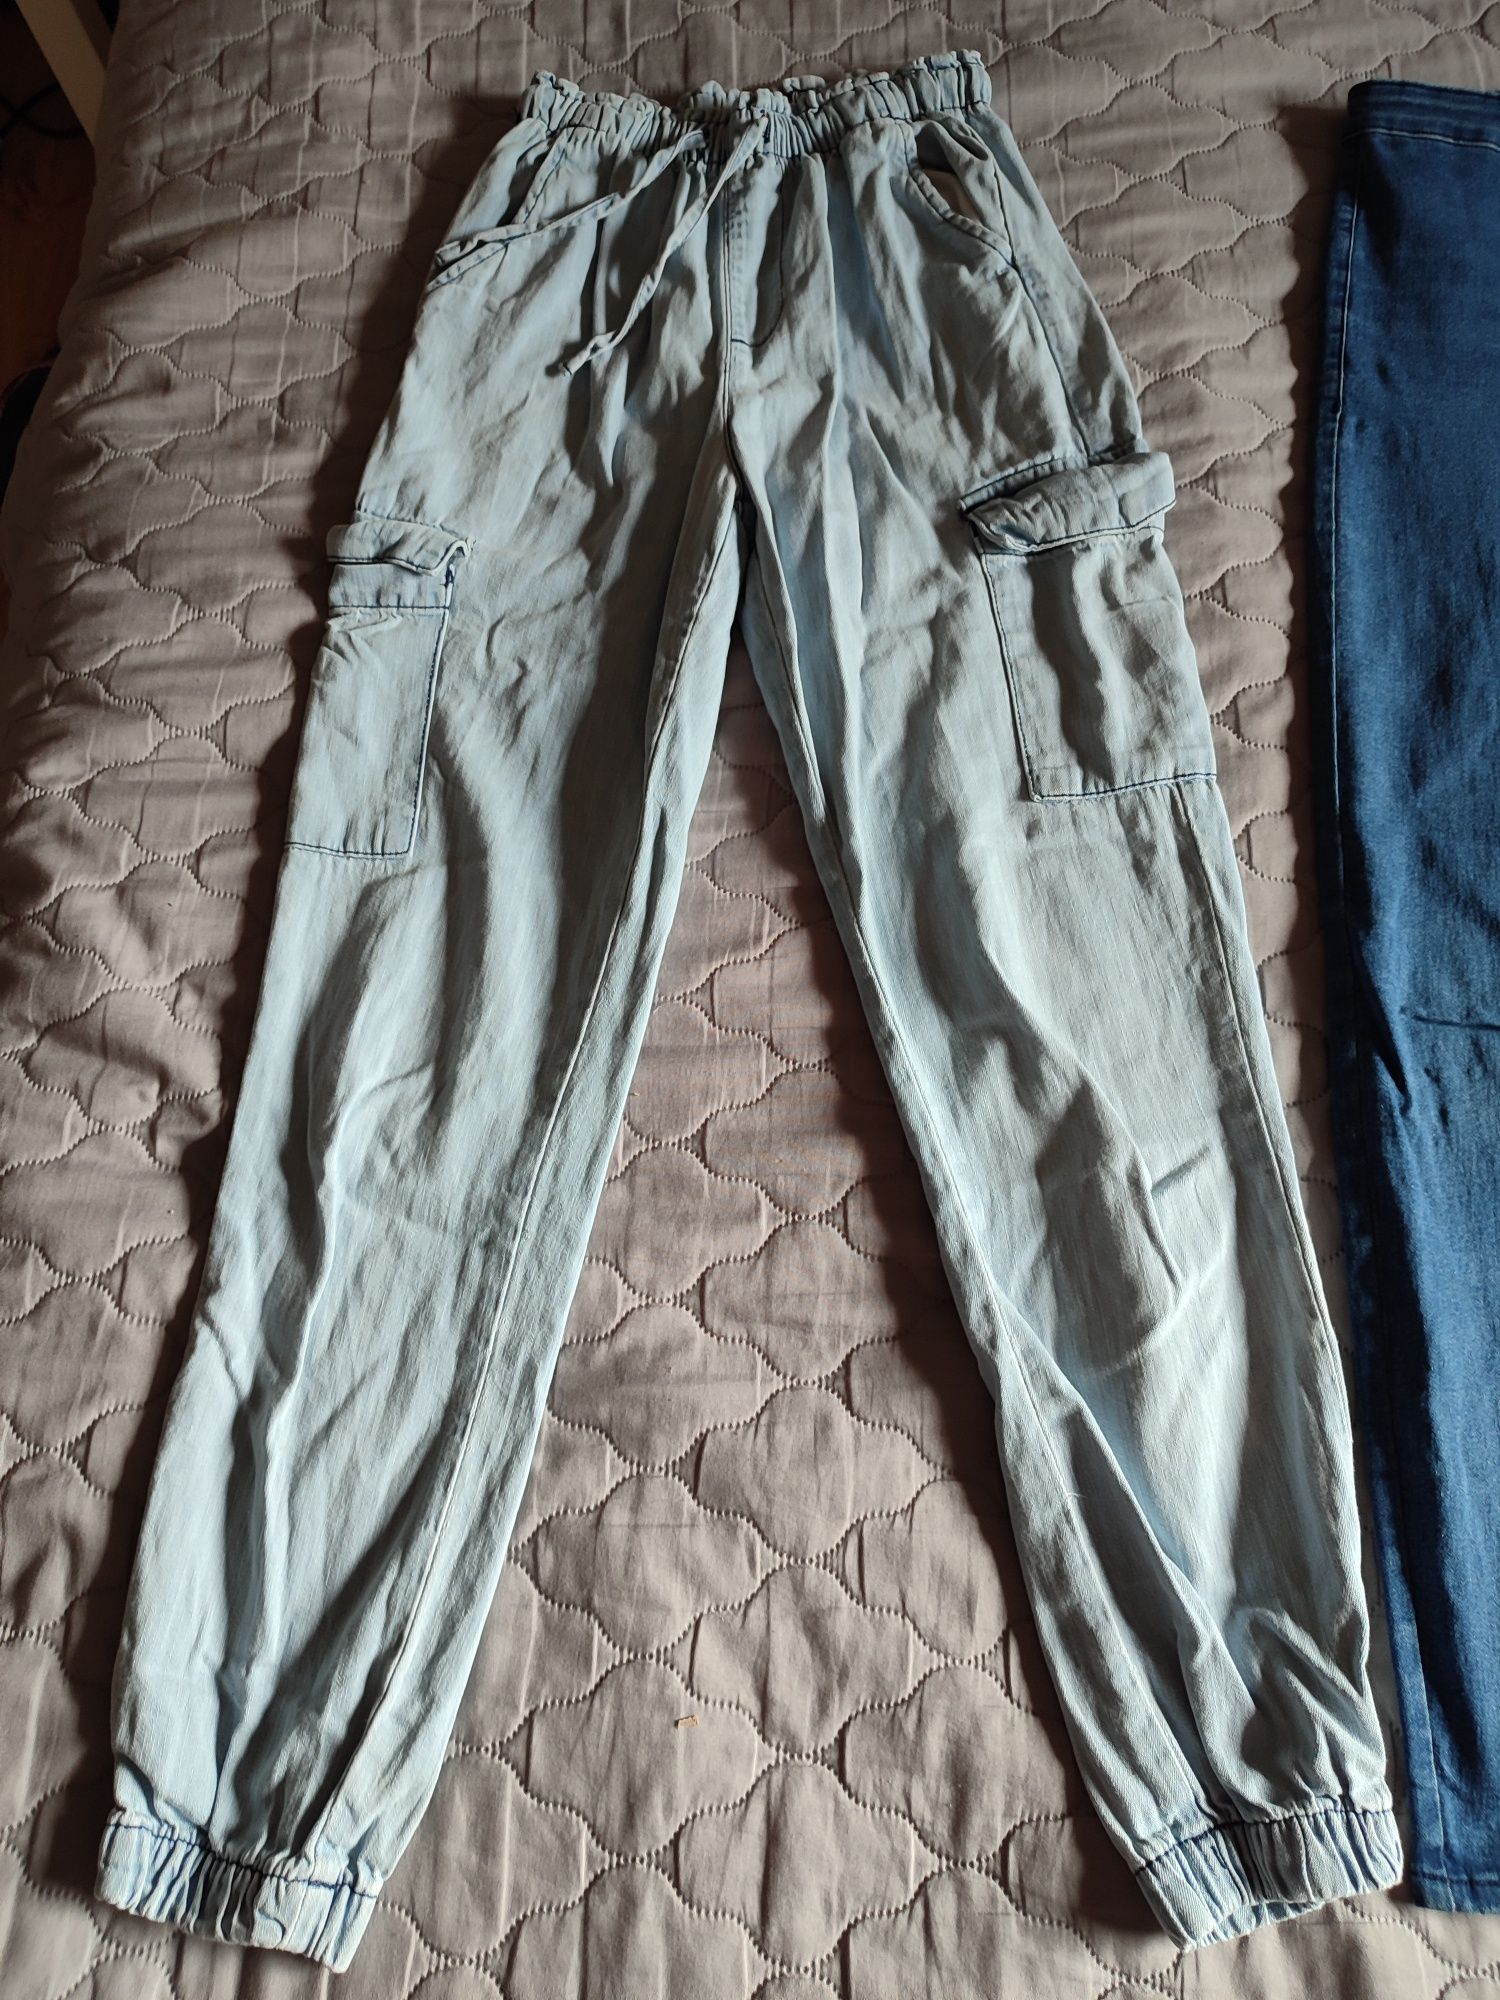 Spodnie jeansy dla nastolatki r. 164 (3 szt) Guess, Sinsay